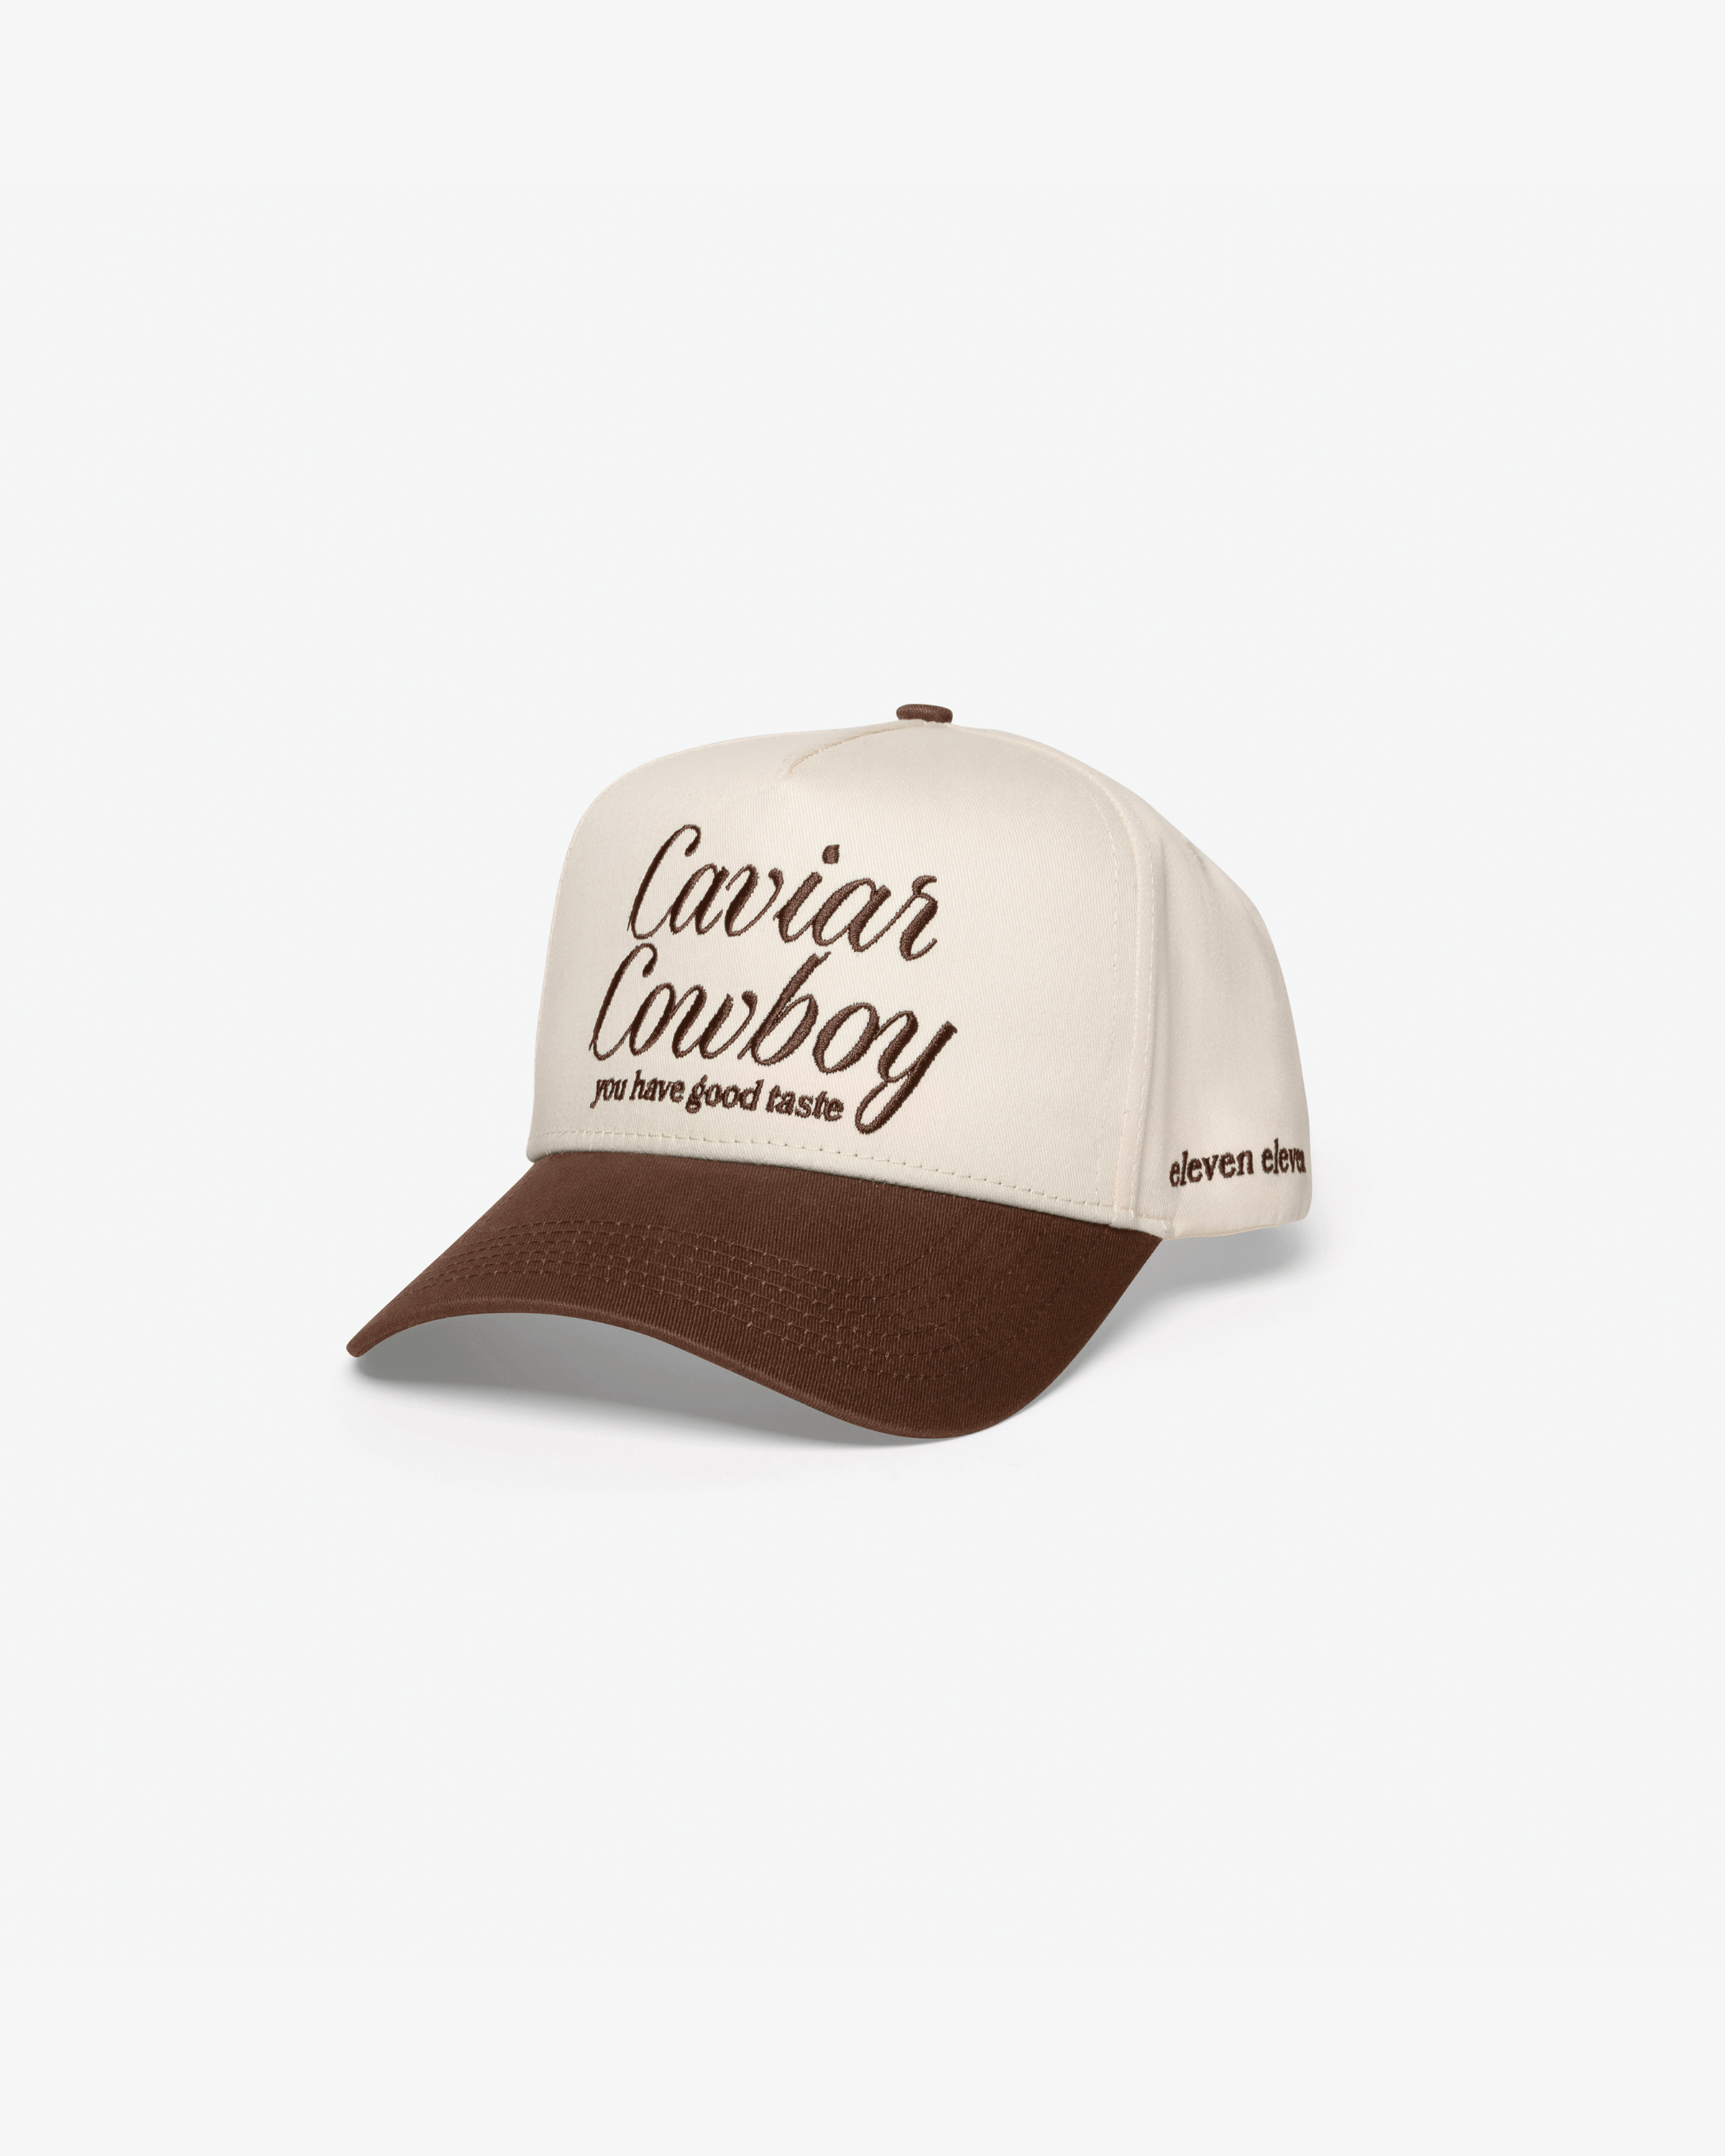 Caviar Cowboy Cap (Beige & Brown)